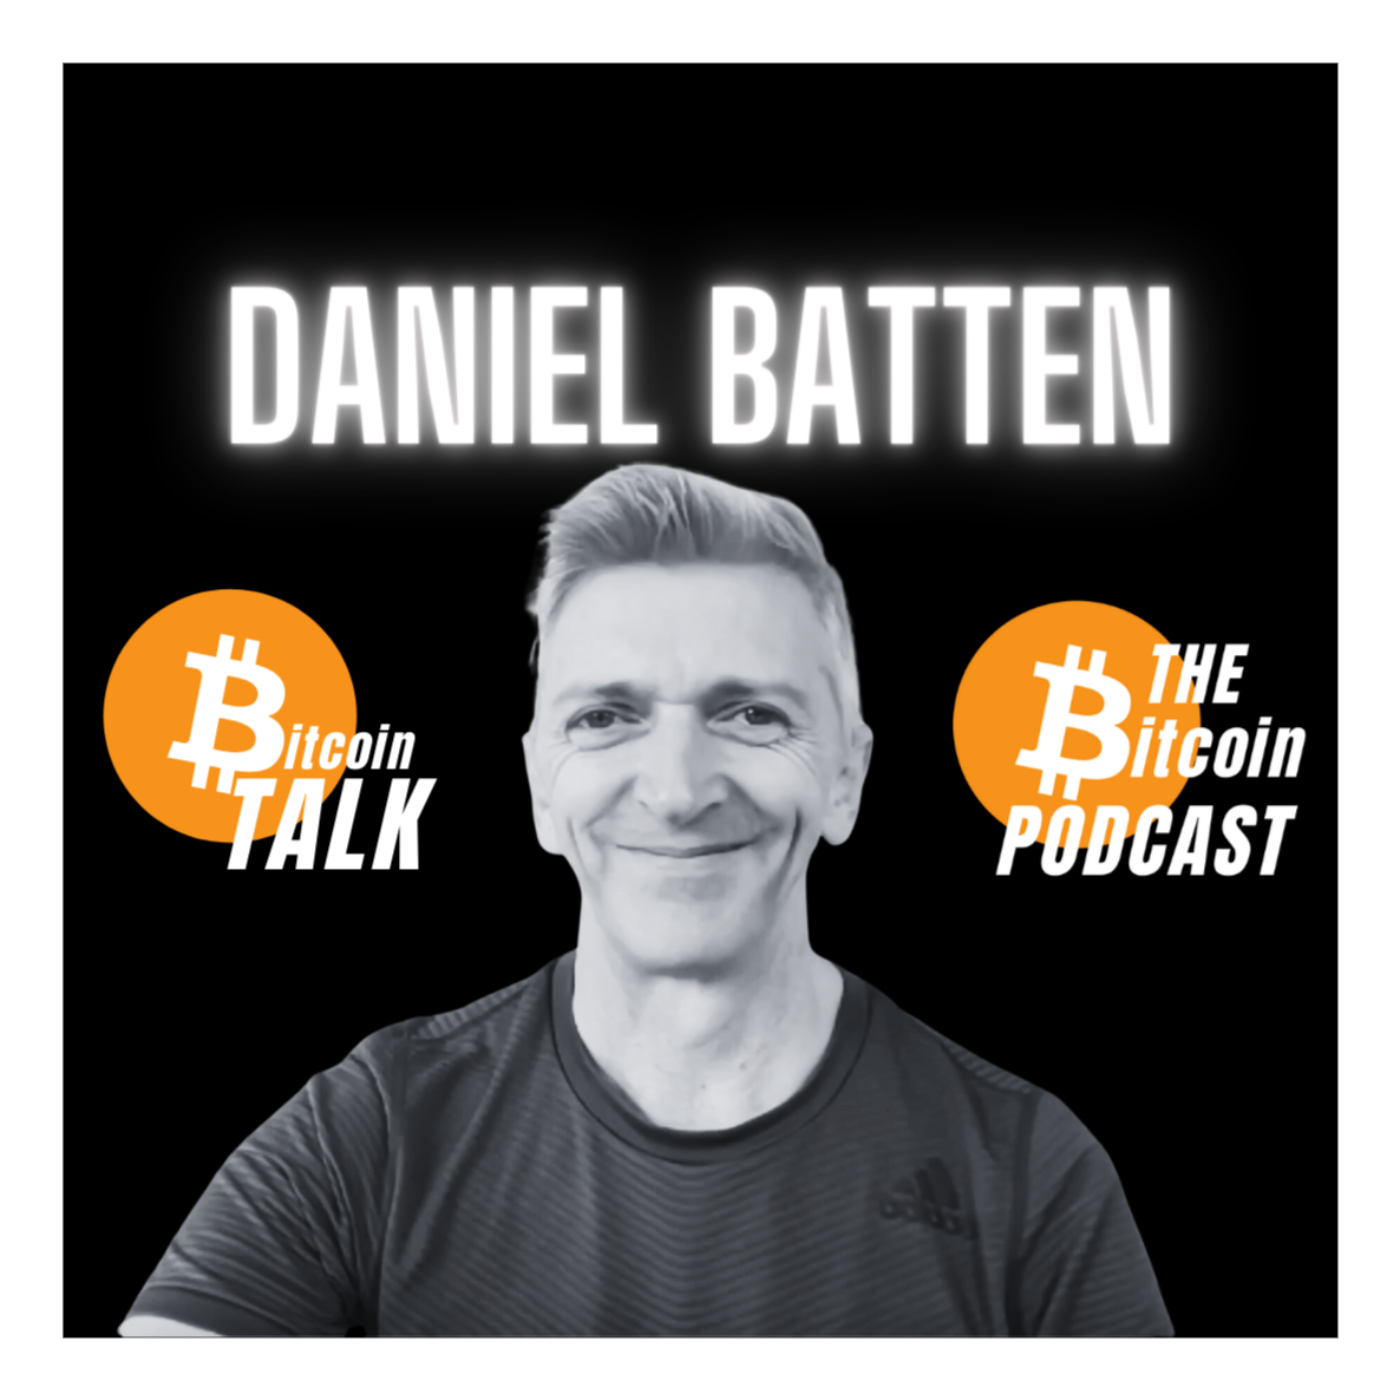 Bitcoin Turns Trash Into Treasure (Literally) - Daniel Batten (Bitcoin Talk on THE Bitcoin Podcast)